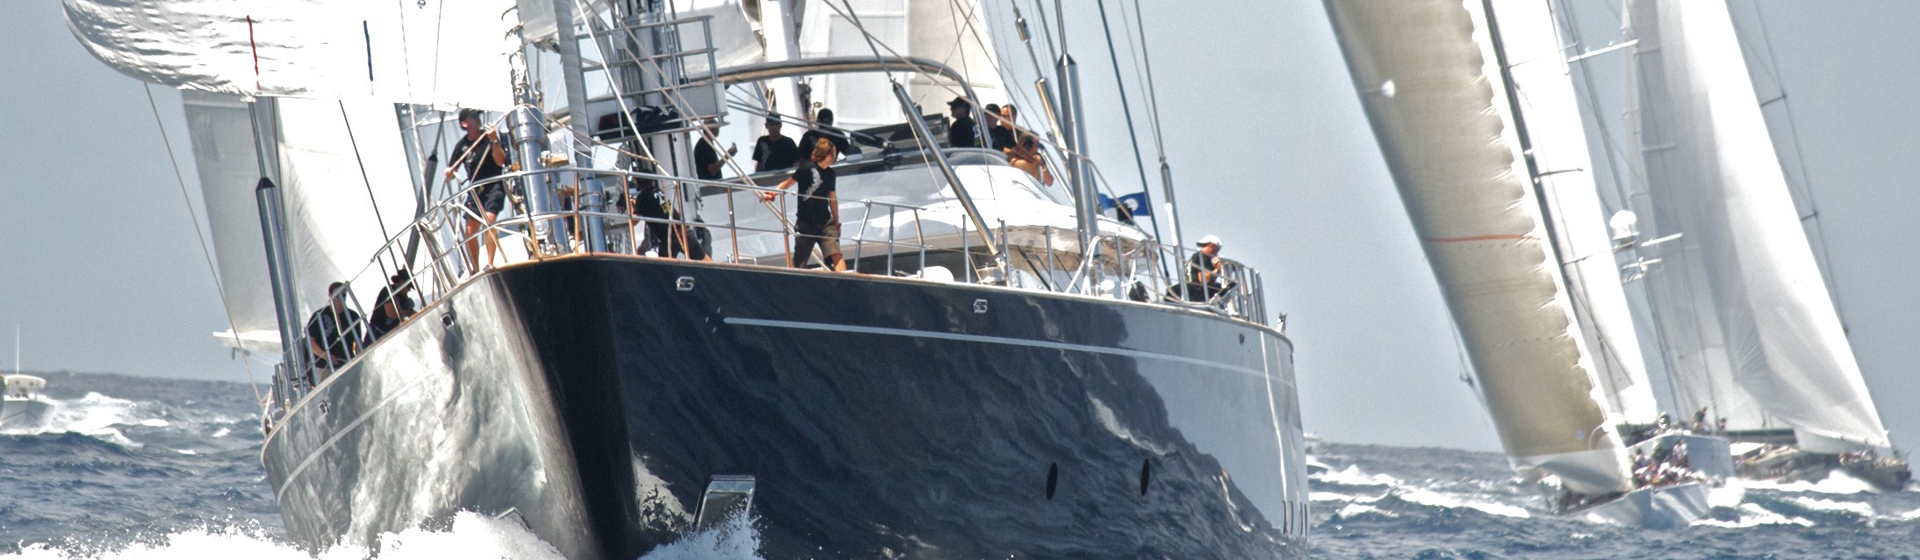 Charter a Luxury Sailing Yacht for Regattas